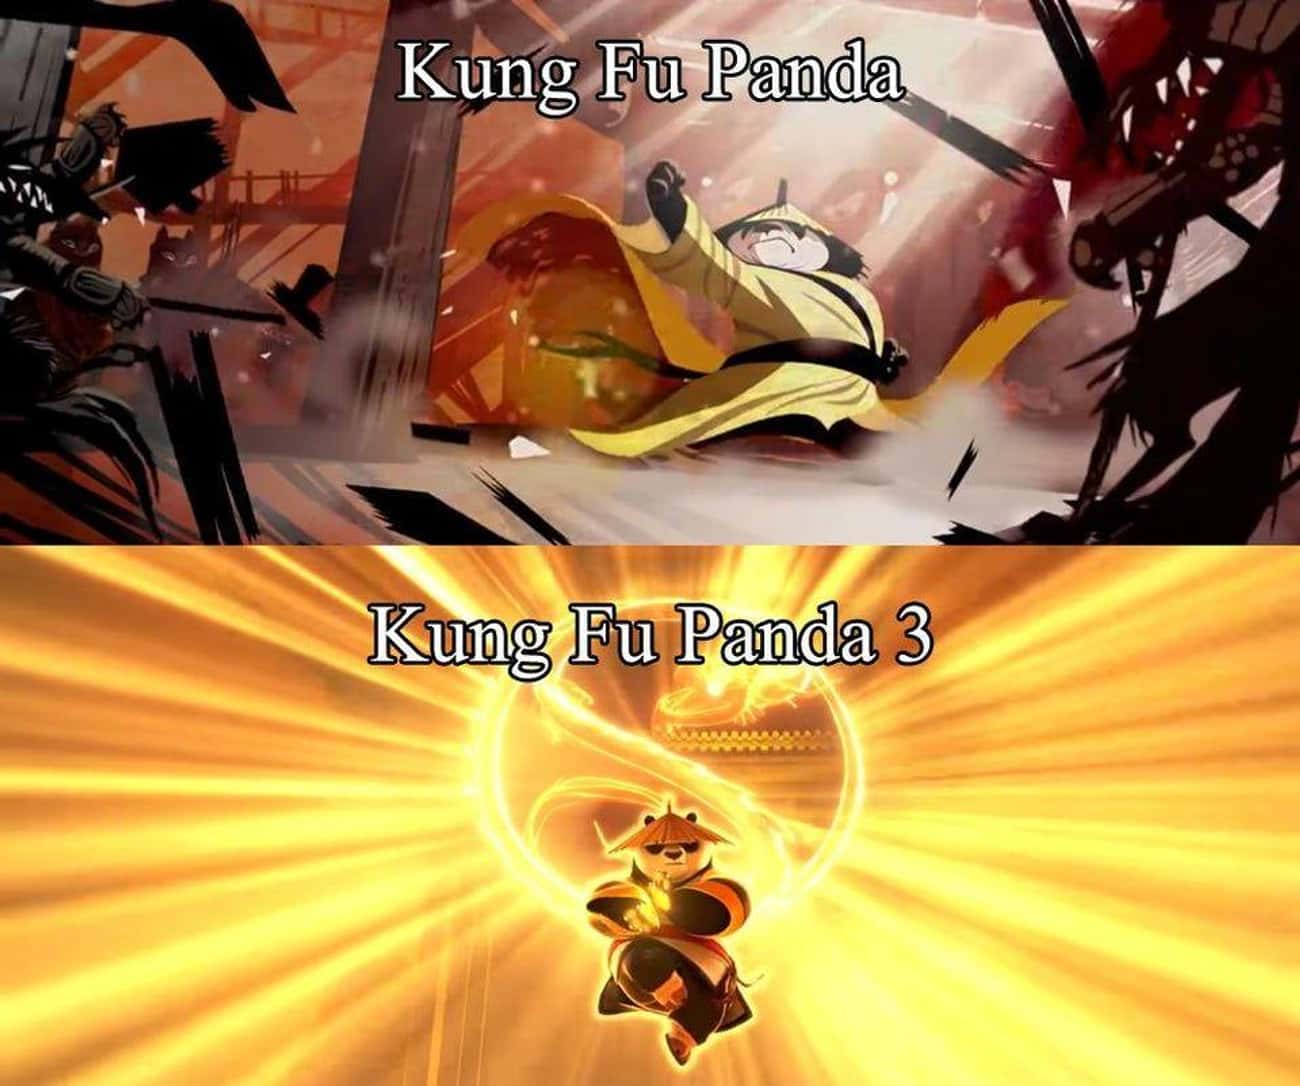 Po's Dreams Turn Into Reality By 'Kung Fu Panda 3'